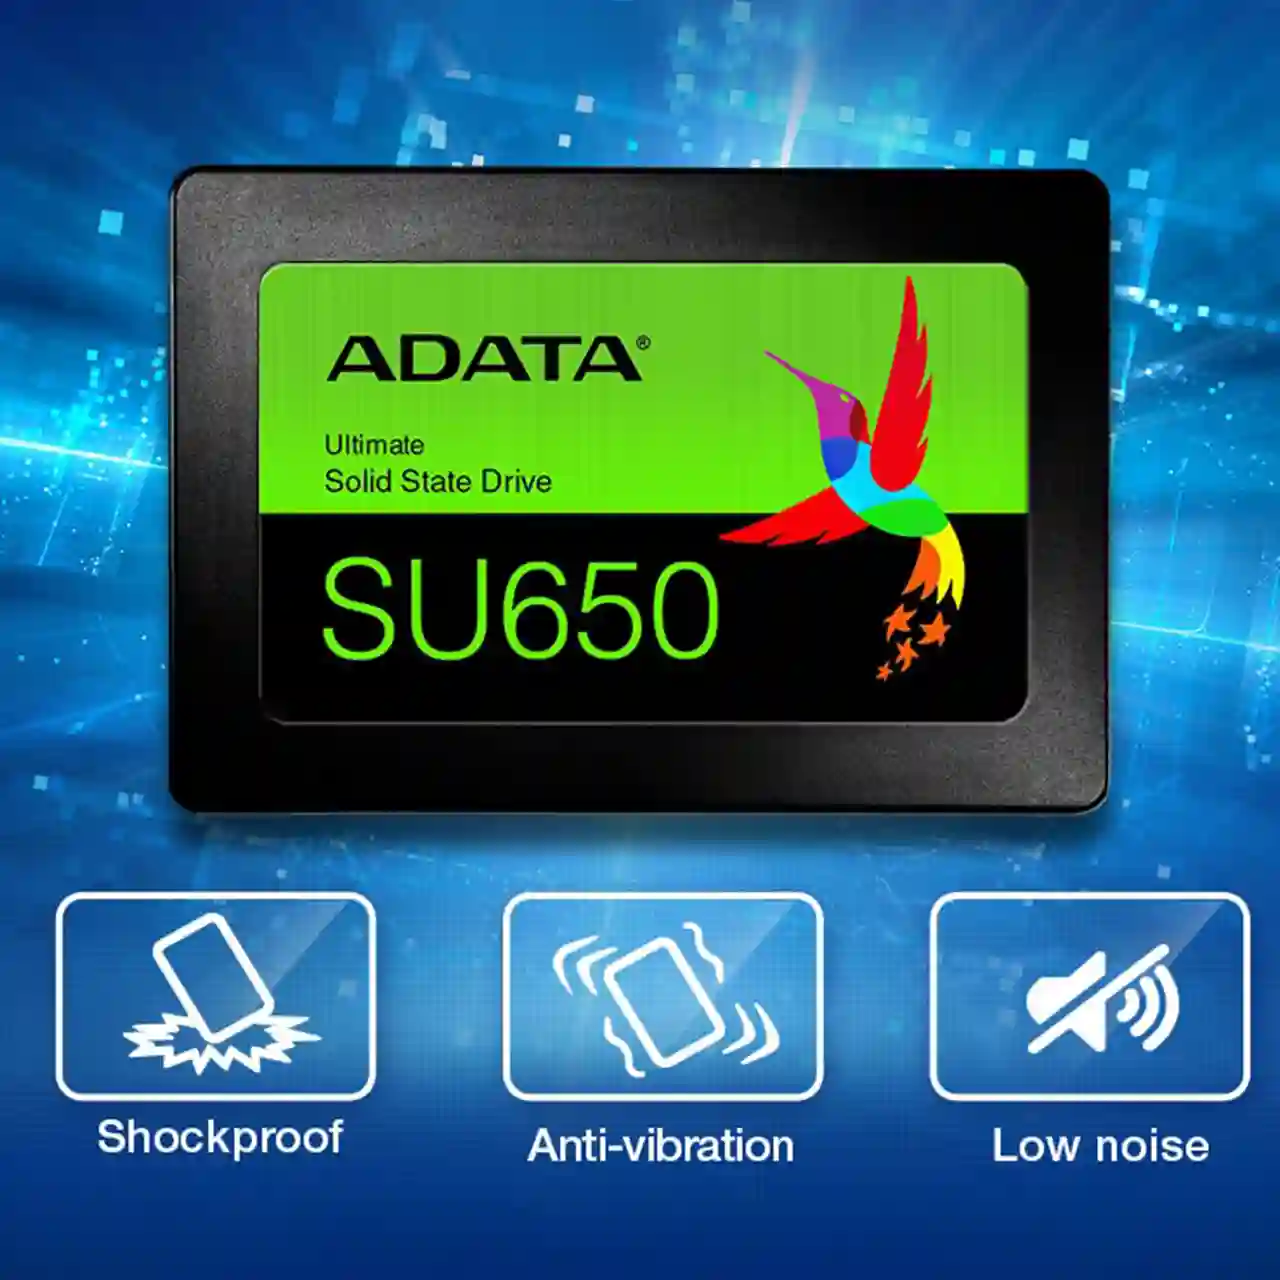 Adata 650. SSD A data 240gb. SSD A data su650 120gb. АДАТА su650 240. Ссд диск АДАТА 120 ГБ.